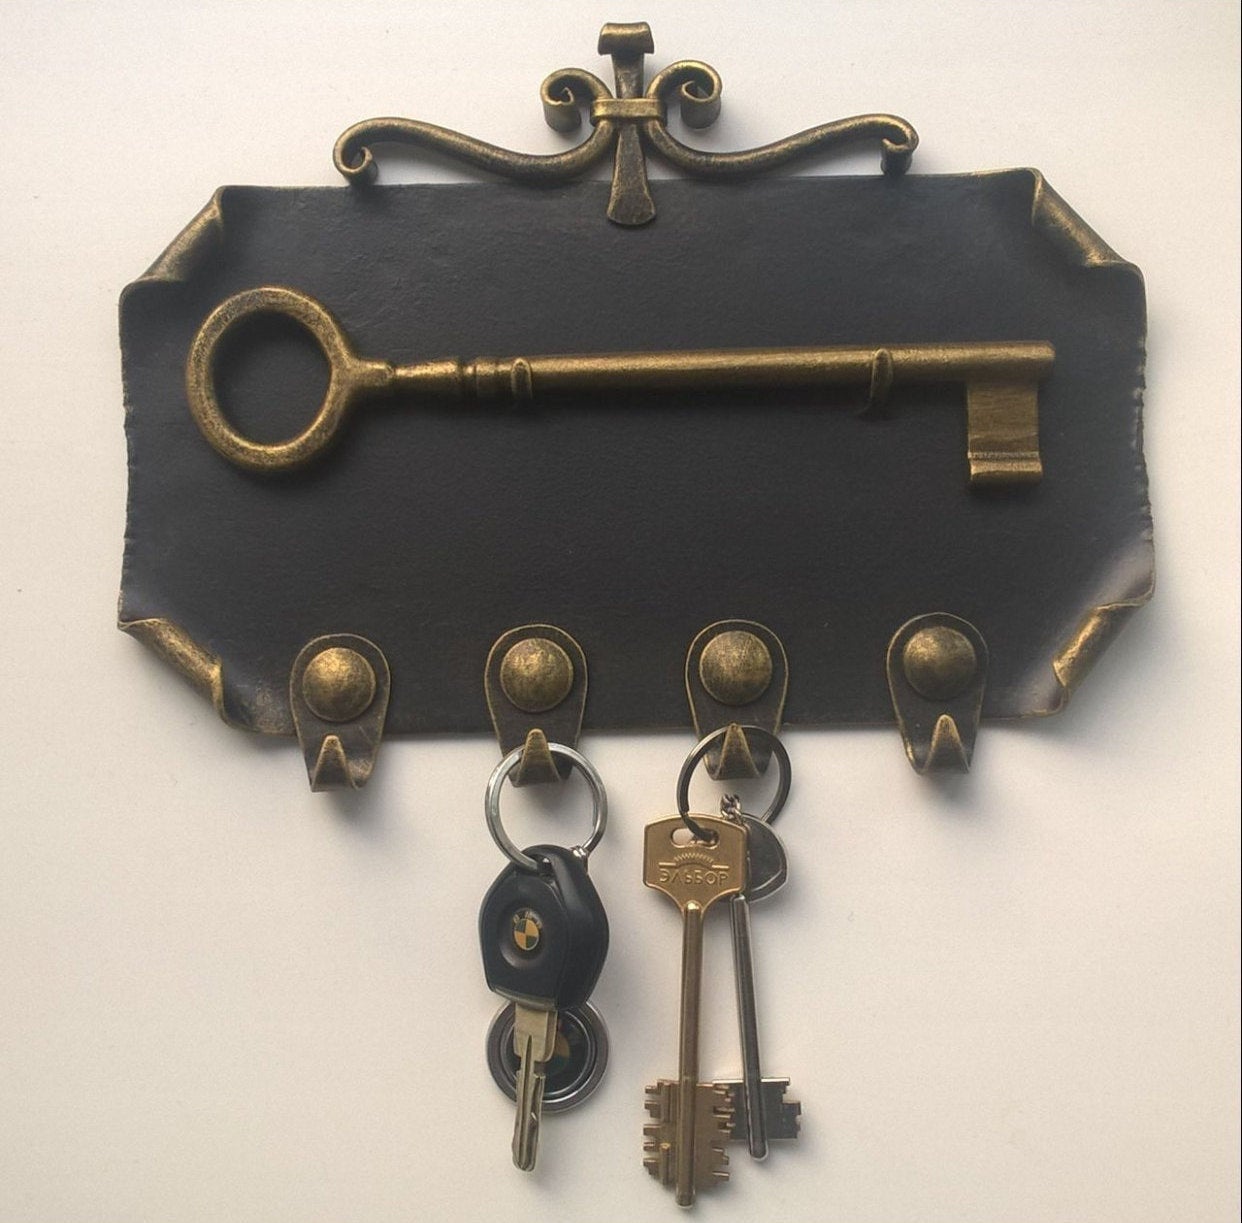 Key hooks, key holder for wall, wall key holder, key holder, key rack, wall key rack, hooks, wall hooks, decorative hooks, keys, key decor